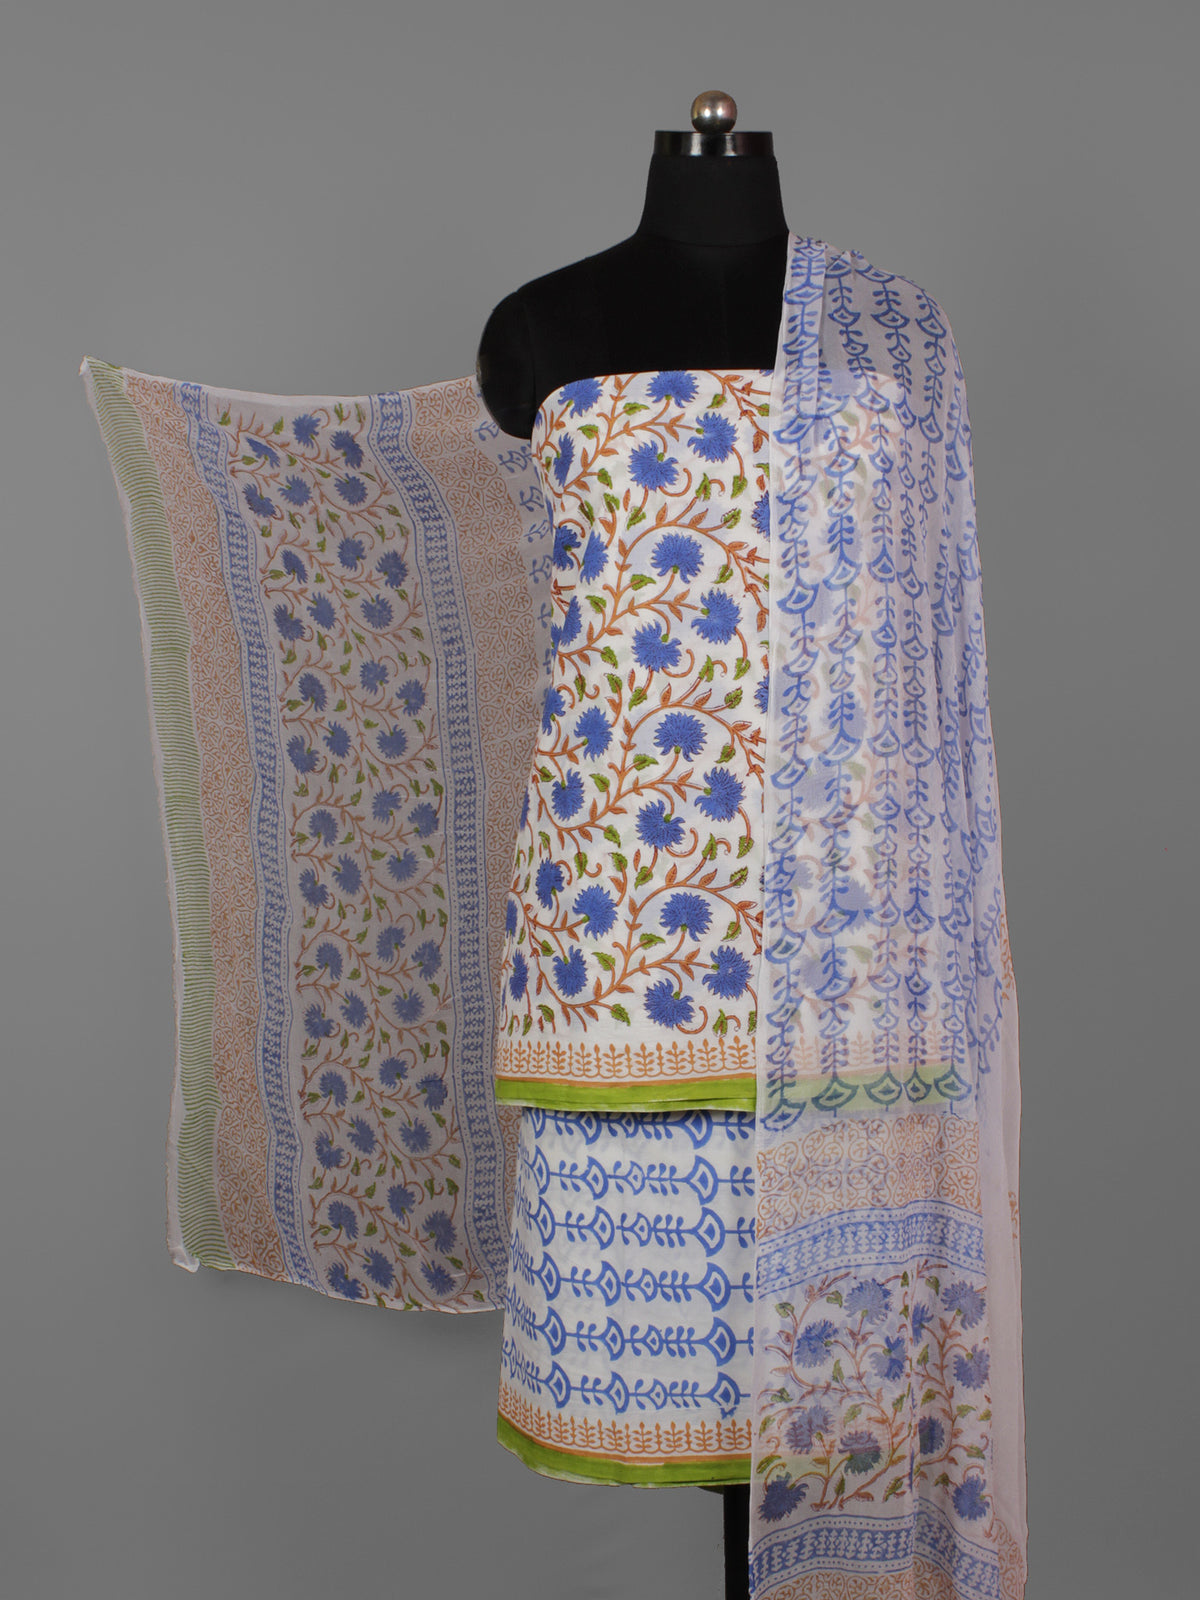 Ivory Blue Green Hand Block Printed Cotton Suit-Salwar Fabric With Chiffon Dupatta (Set of 3) - S16281289